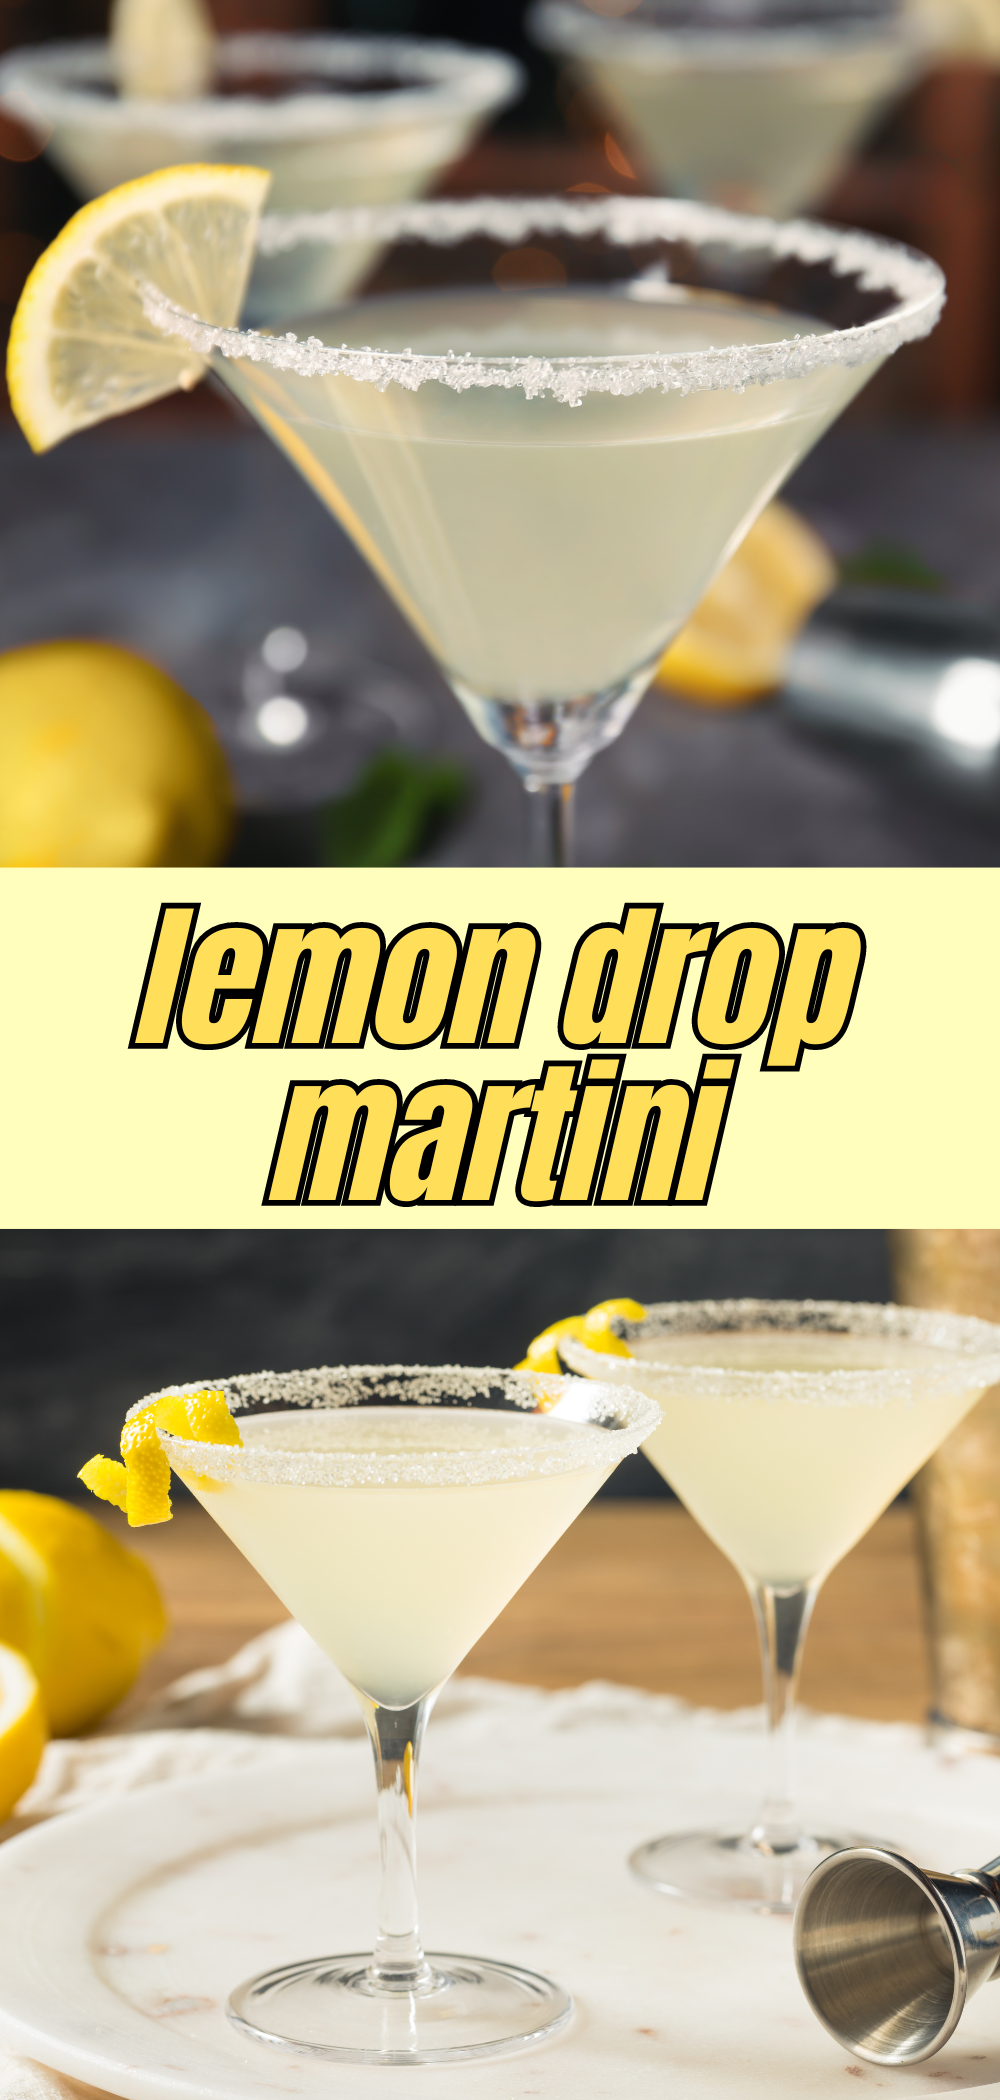 Lemon Drop Cocktails - Whipped It Up